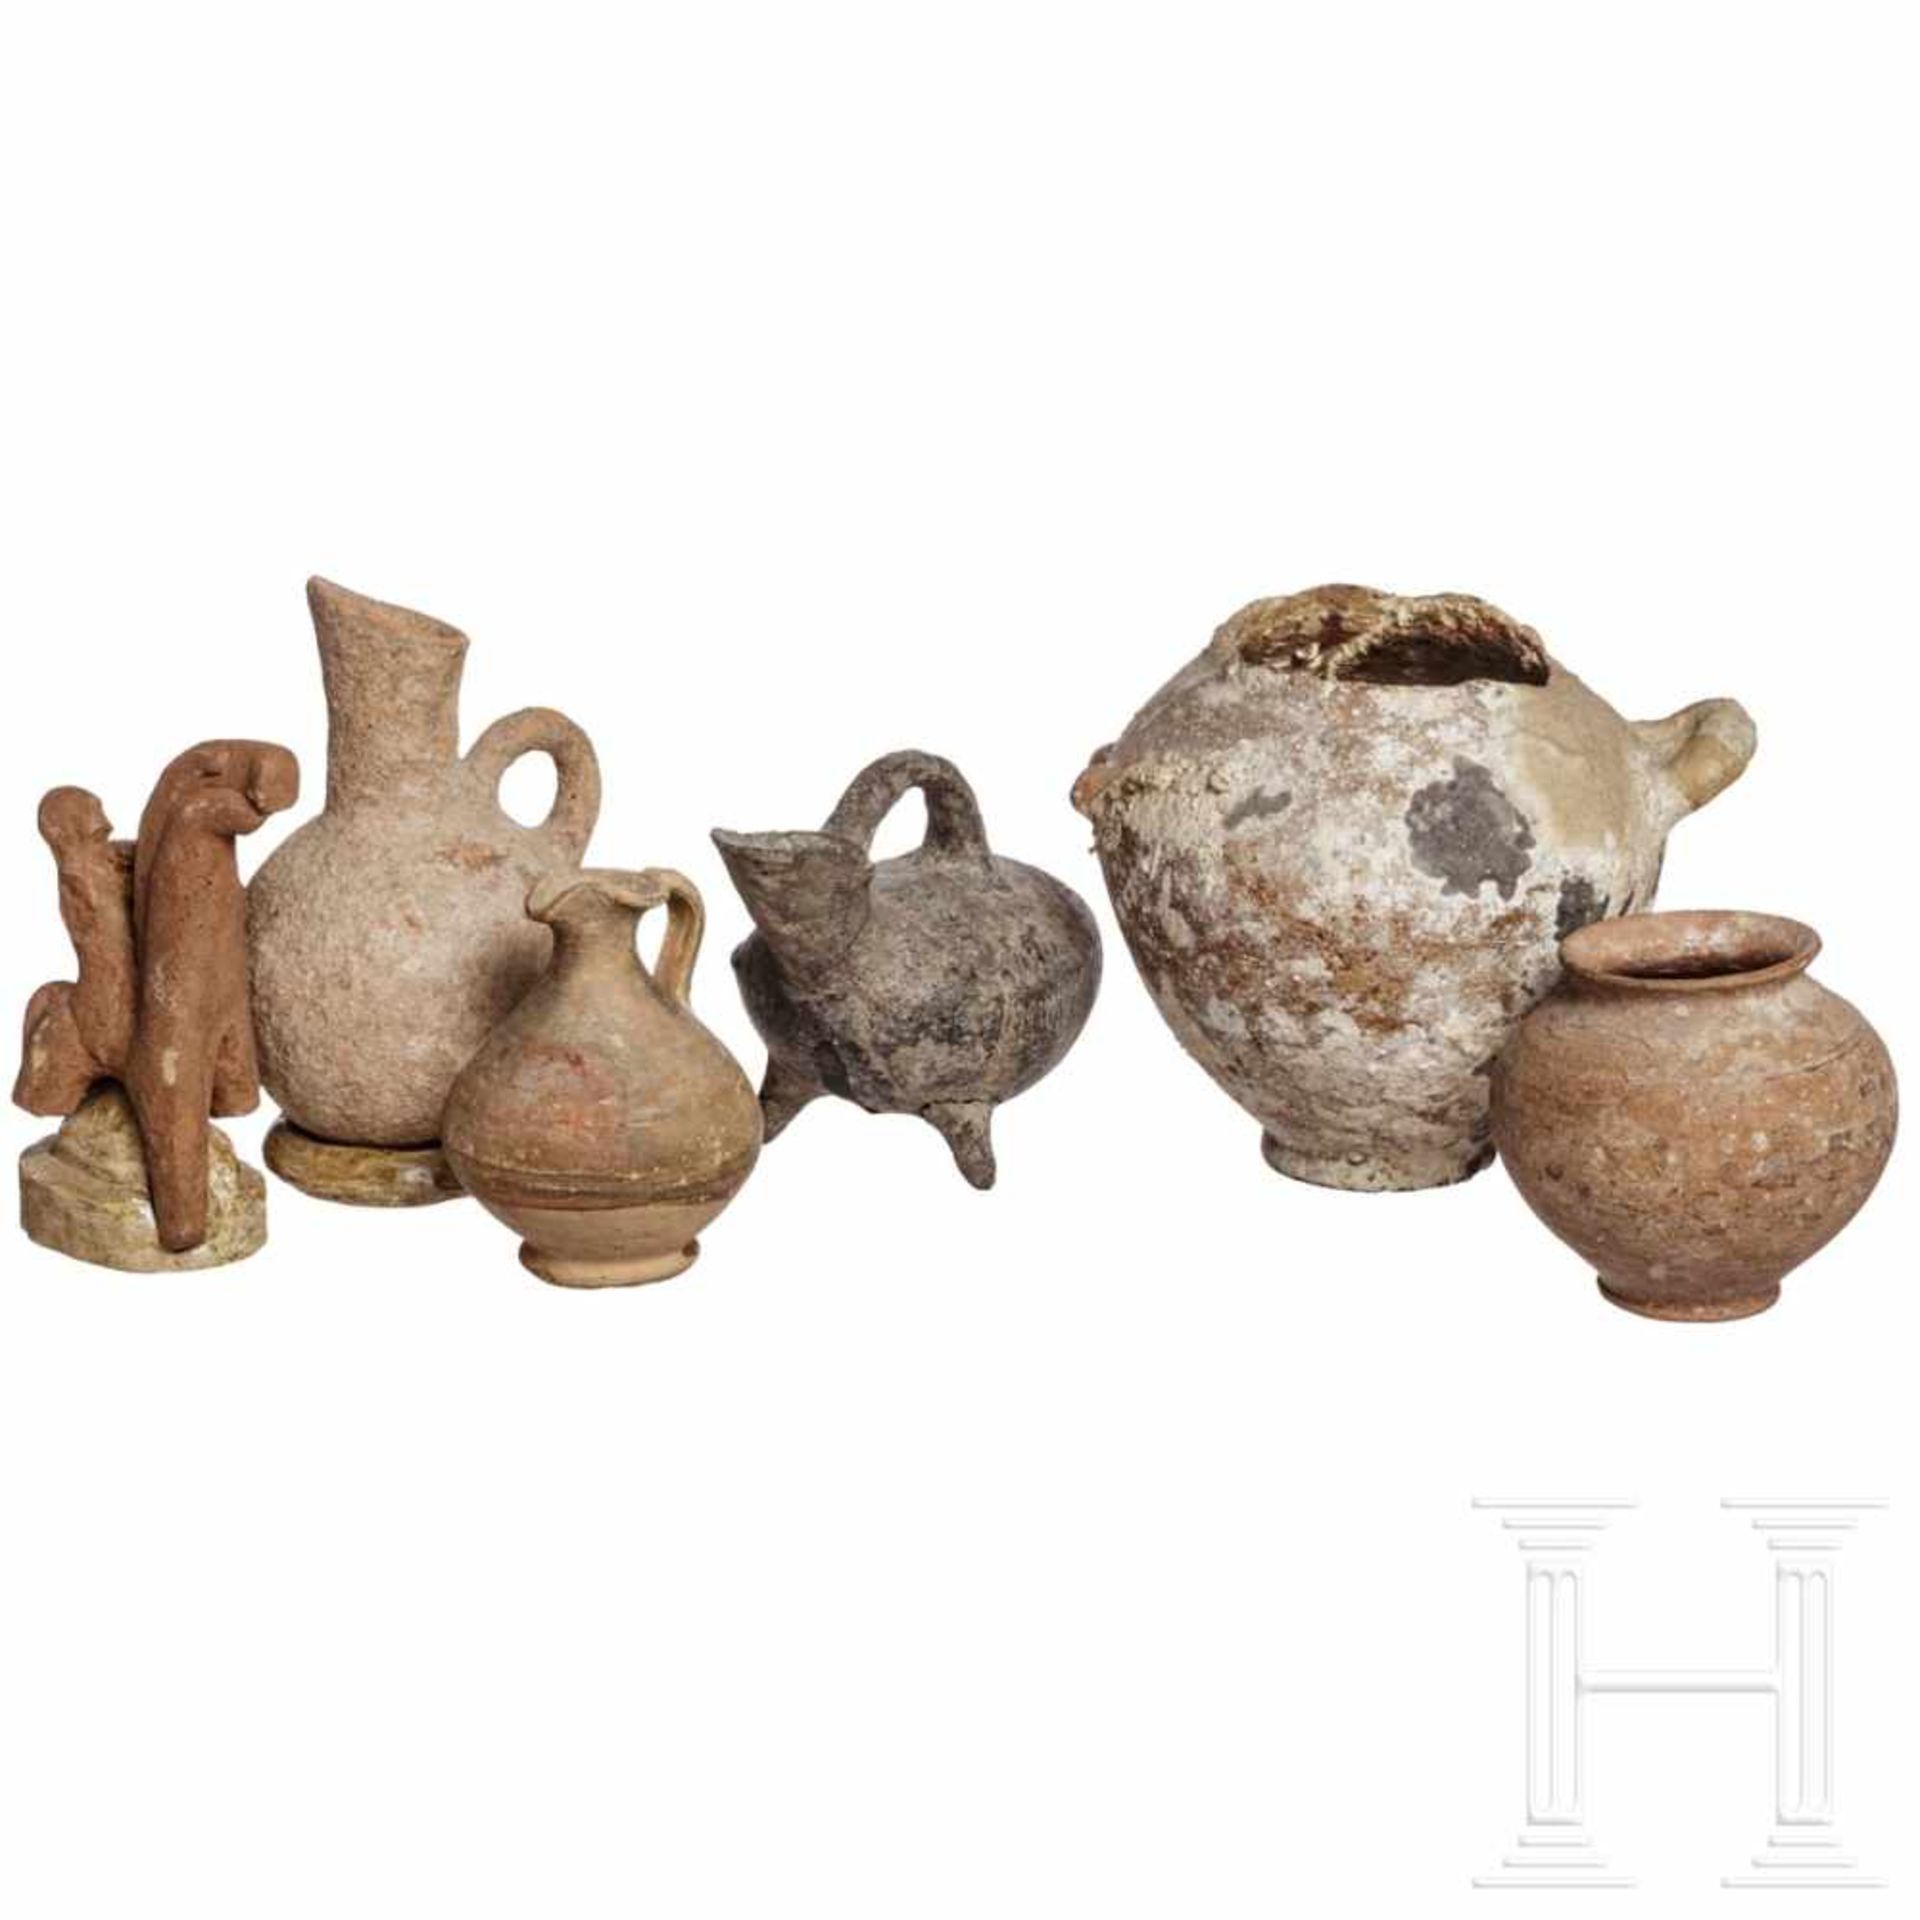 Hethitische Keramikgruppe, Anatolien, 2. Jtsd. v. Chr. - Bild 2 aus 2